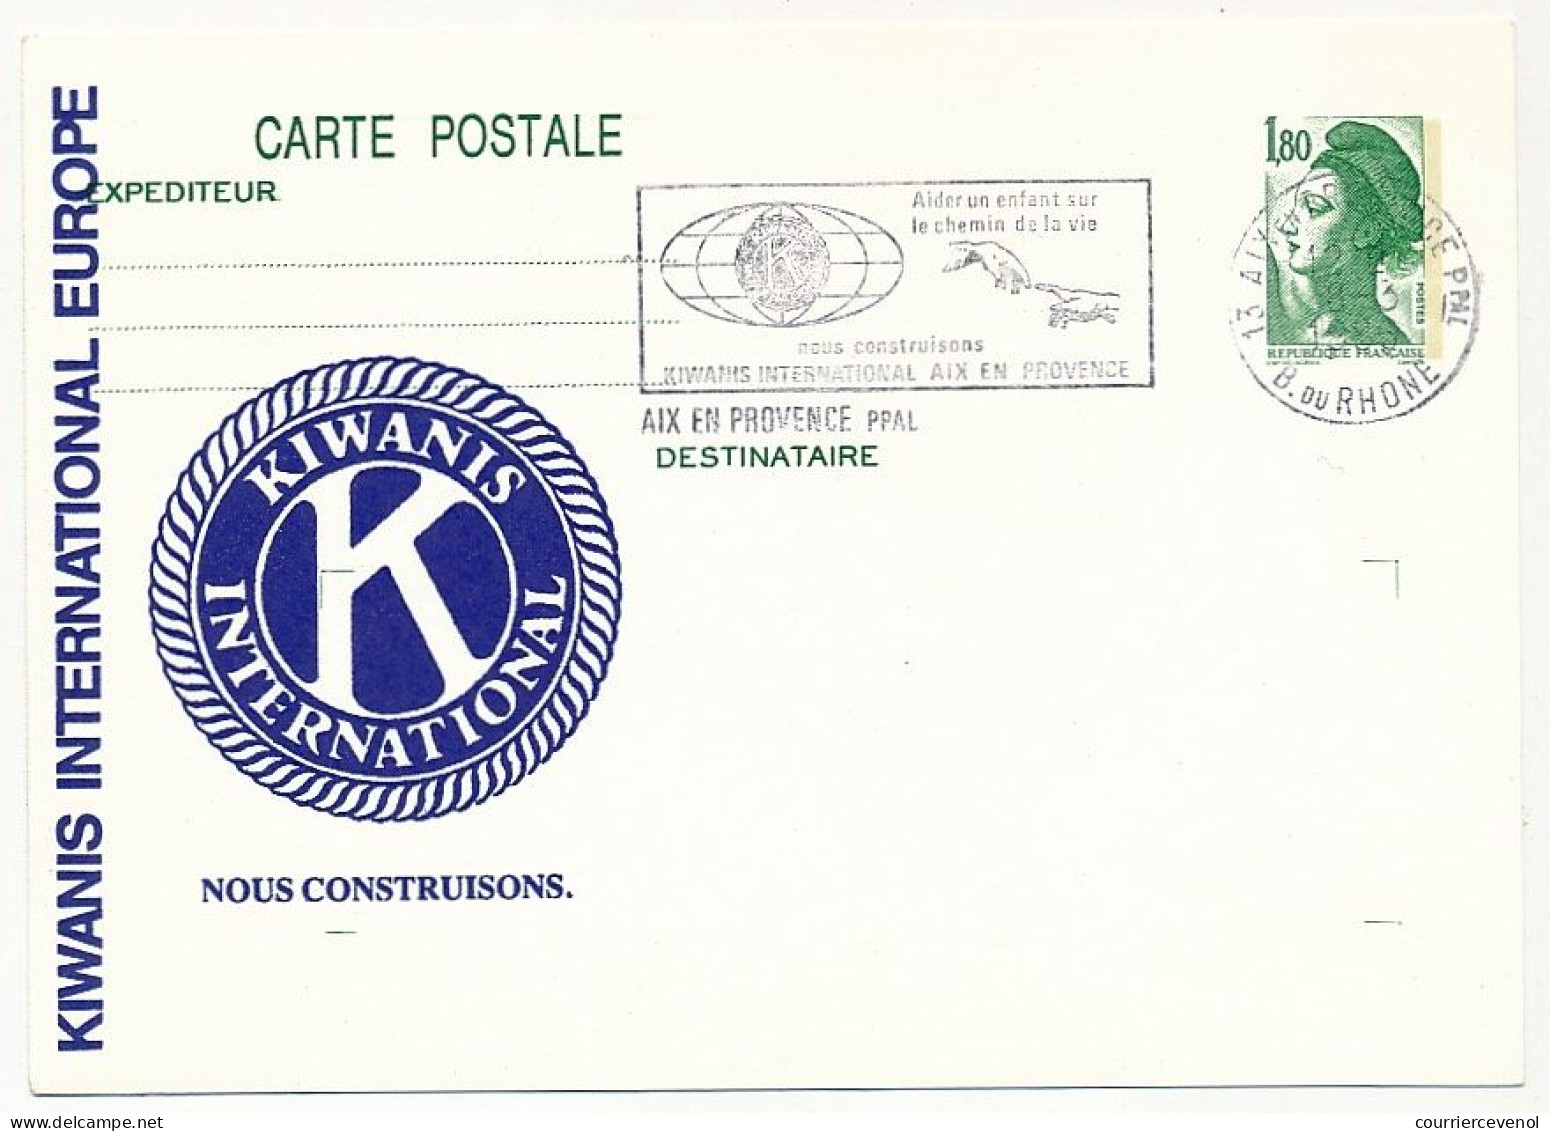 Entier Repiqué - C.P. 1,80 Liberté - KIWANIS INTERNATIONAL EUROPE Omec Idem Aix En Provence 18/3/1986 - Overprinter Postcards (before 1995)